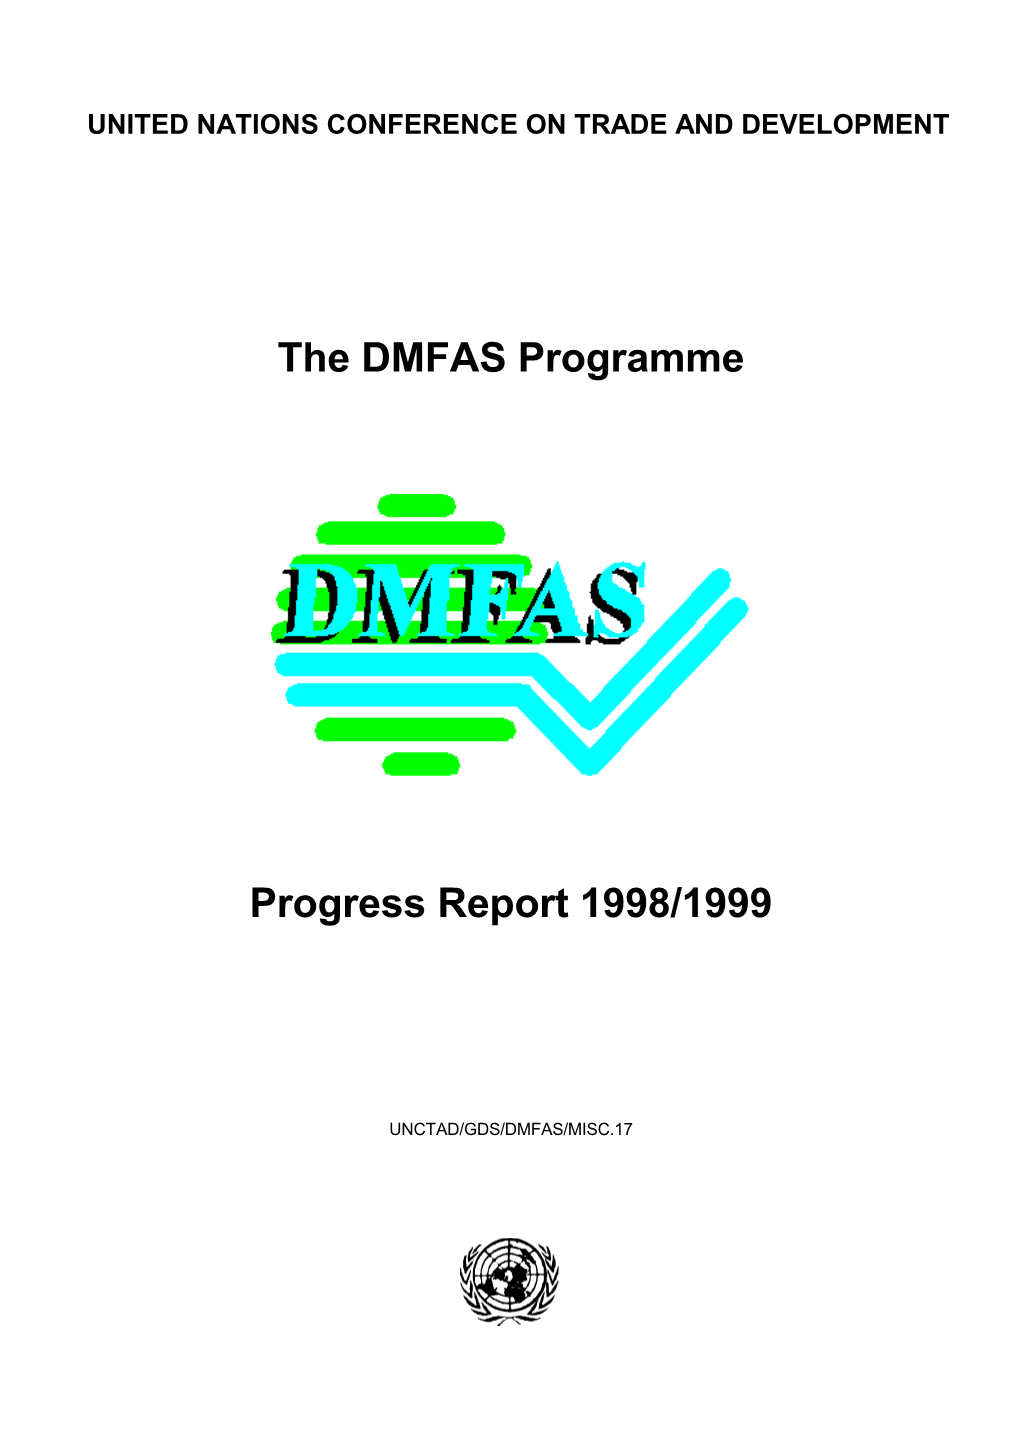 The DMFAS Programme Progress Report 1998/1999